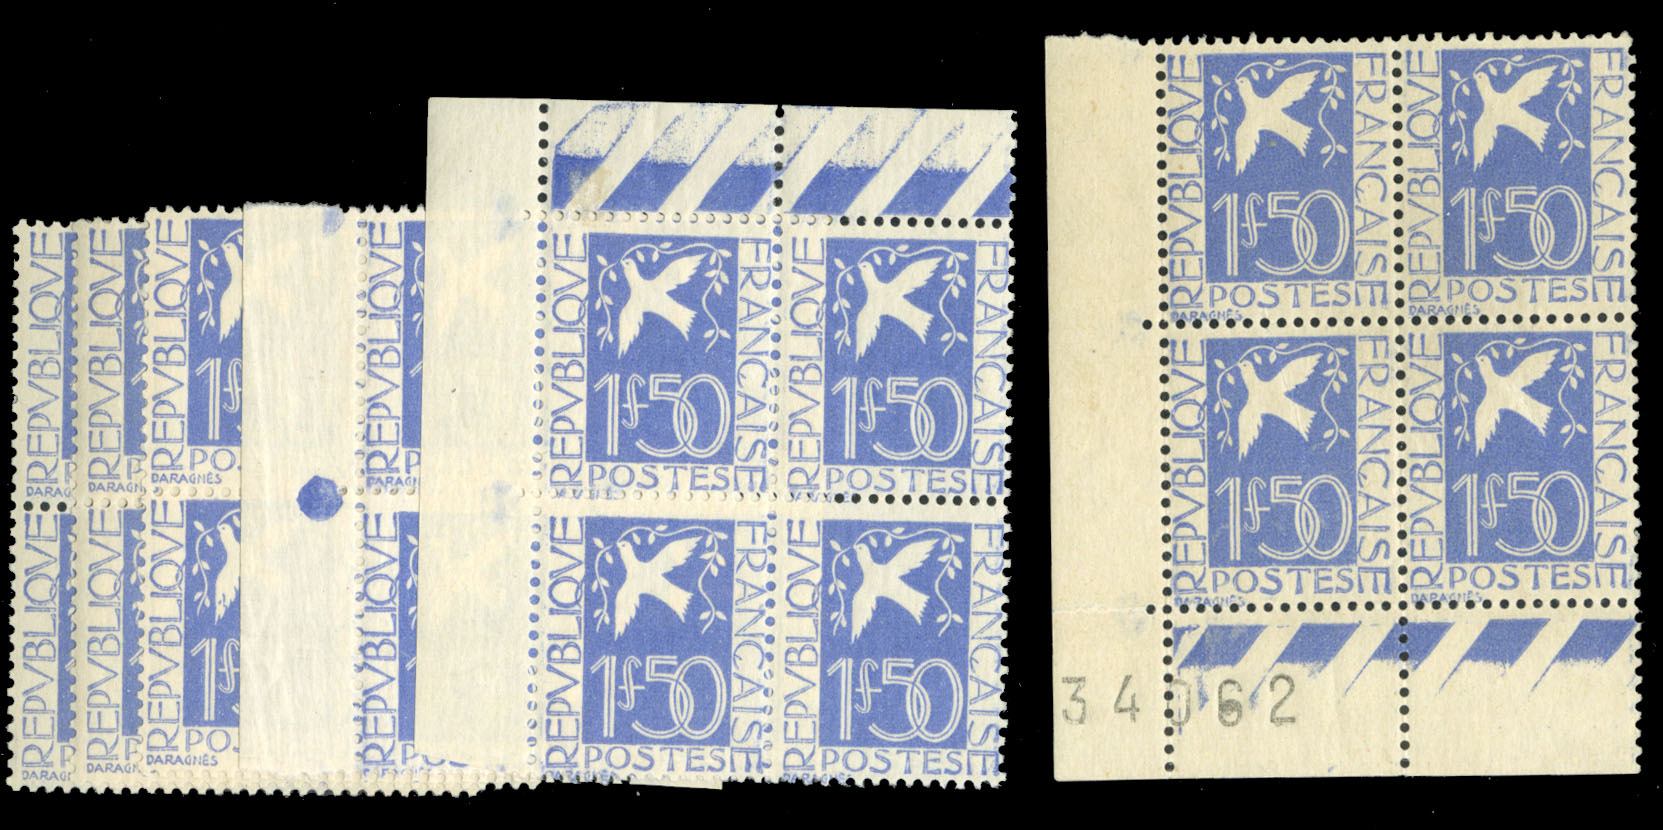 Lot 421 - Ethiopia  -  Cherrystone Auctions U.S. & Worldwide Stamps & Postal History